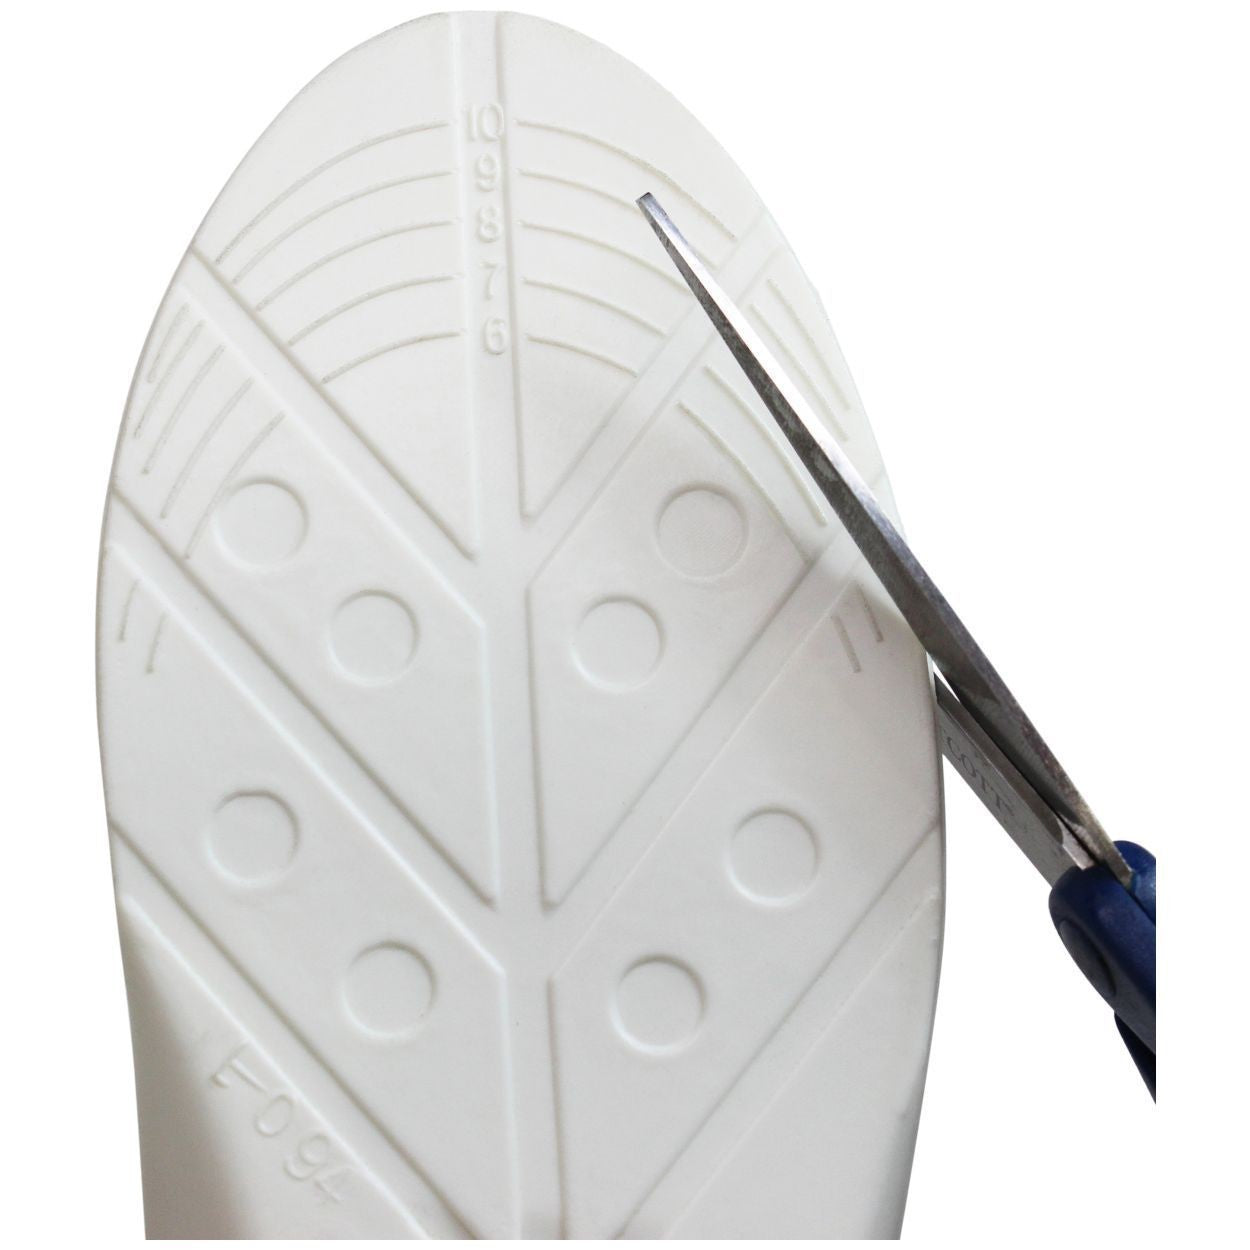 Elevator shoes height increase Sheepskin Leather Adjustable Height Increase Elevator Insoles - Adjustable 3.8 CM | 1.5 INCH Taller - IK306